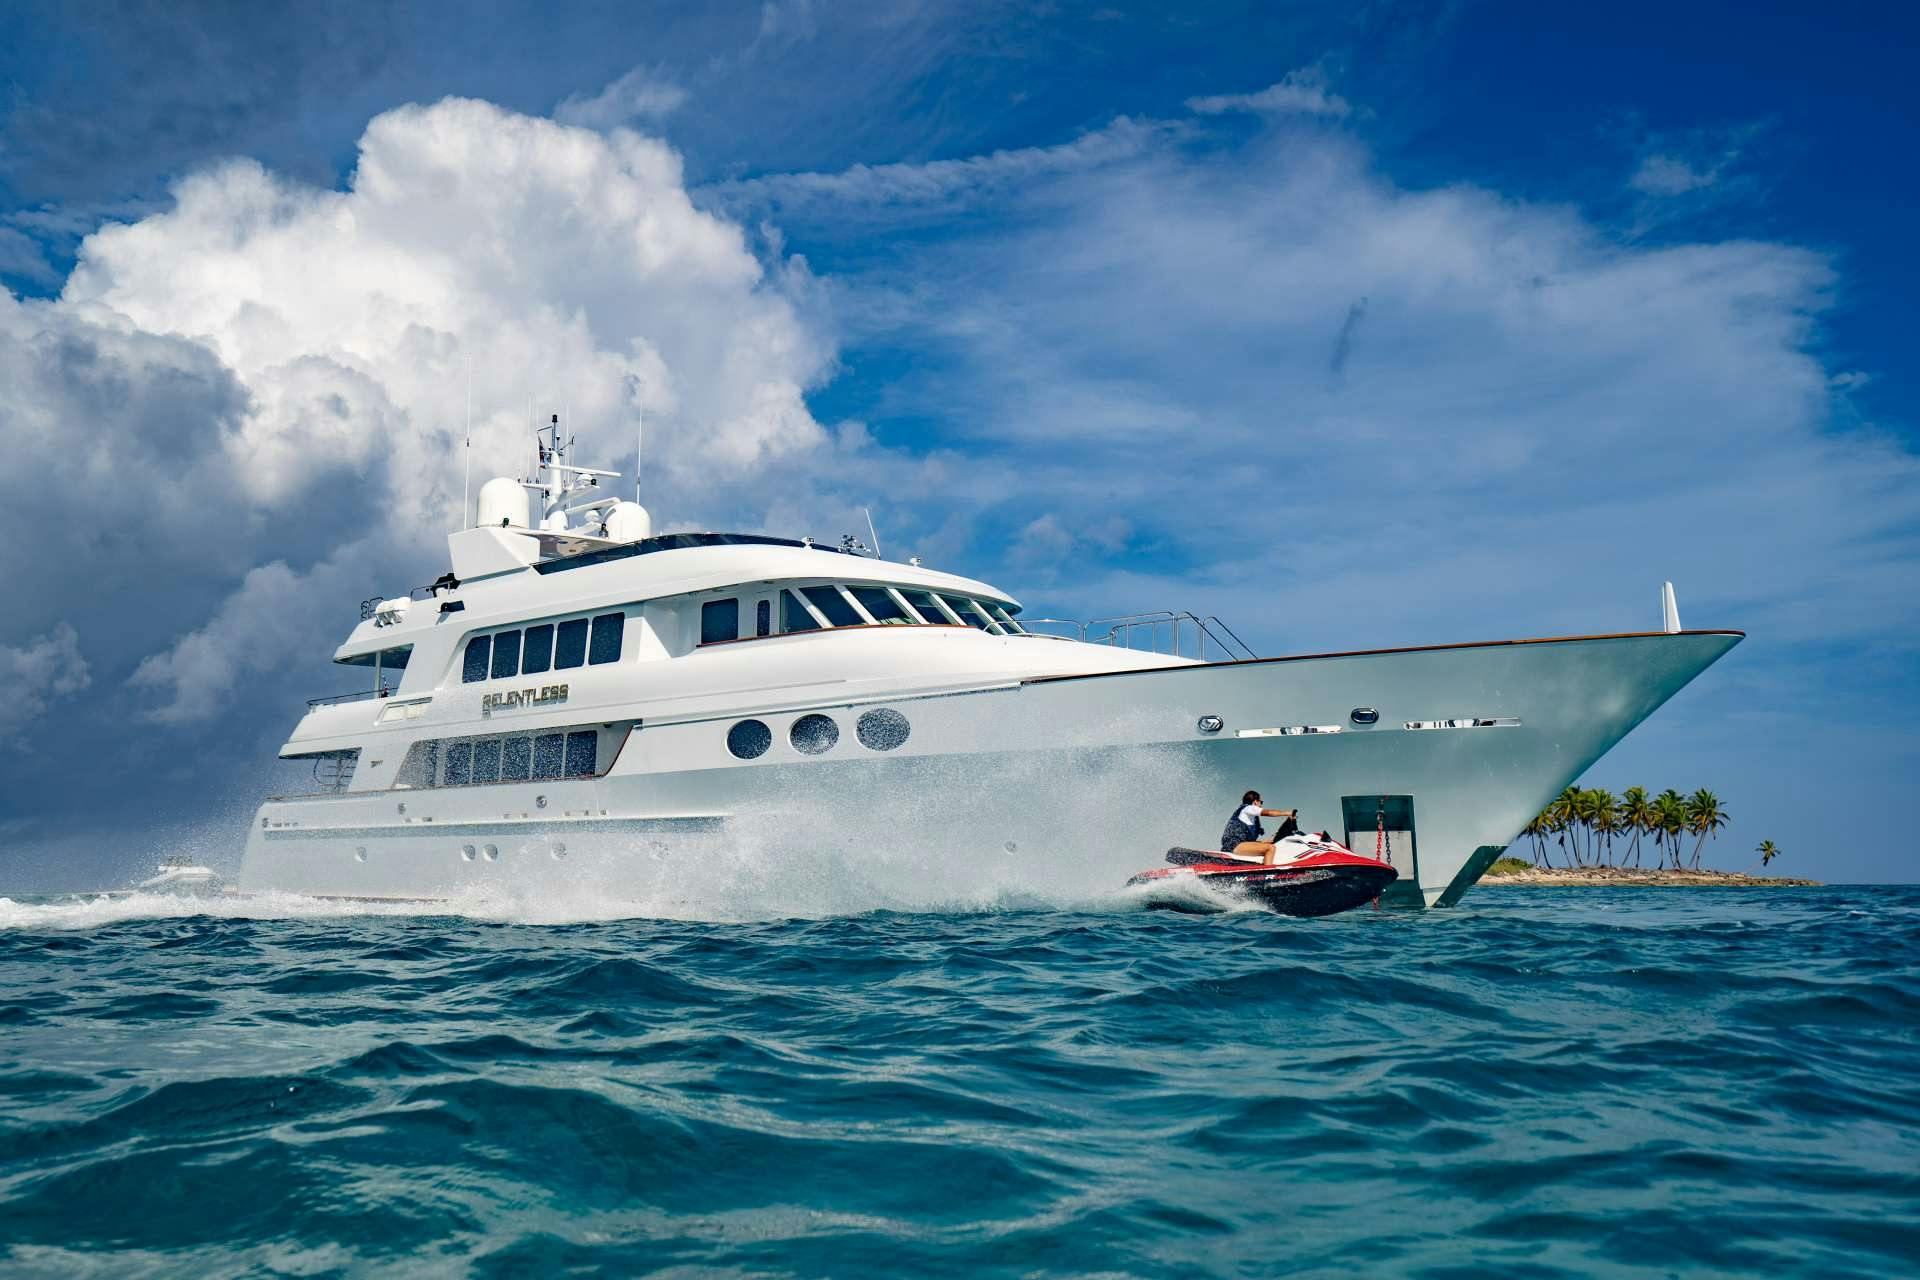 relentless - Yacht Charter British Virgin Islands & Boat hire in Bahamas & Caribbean 1